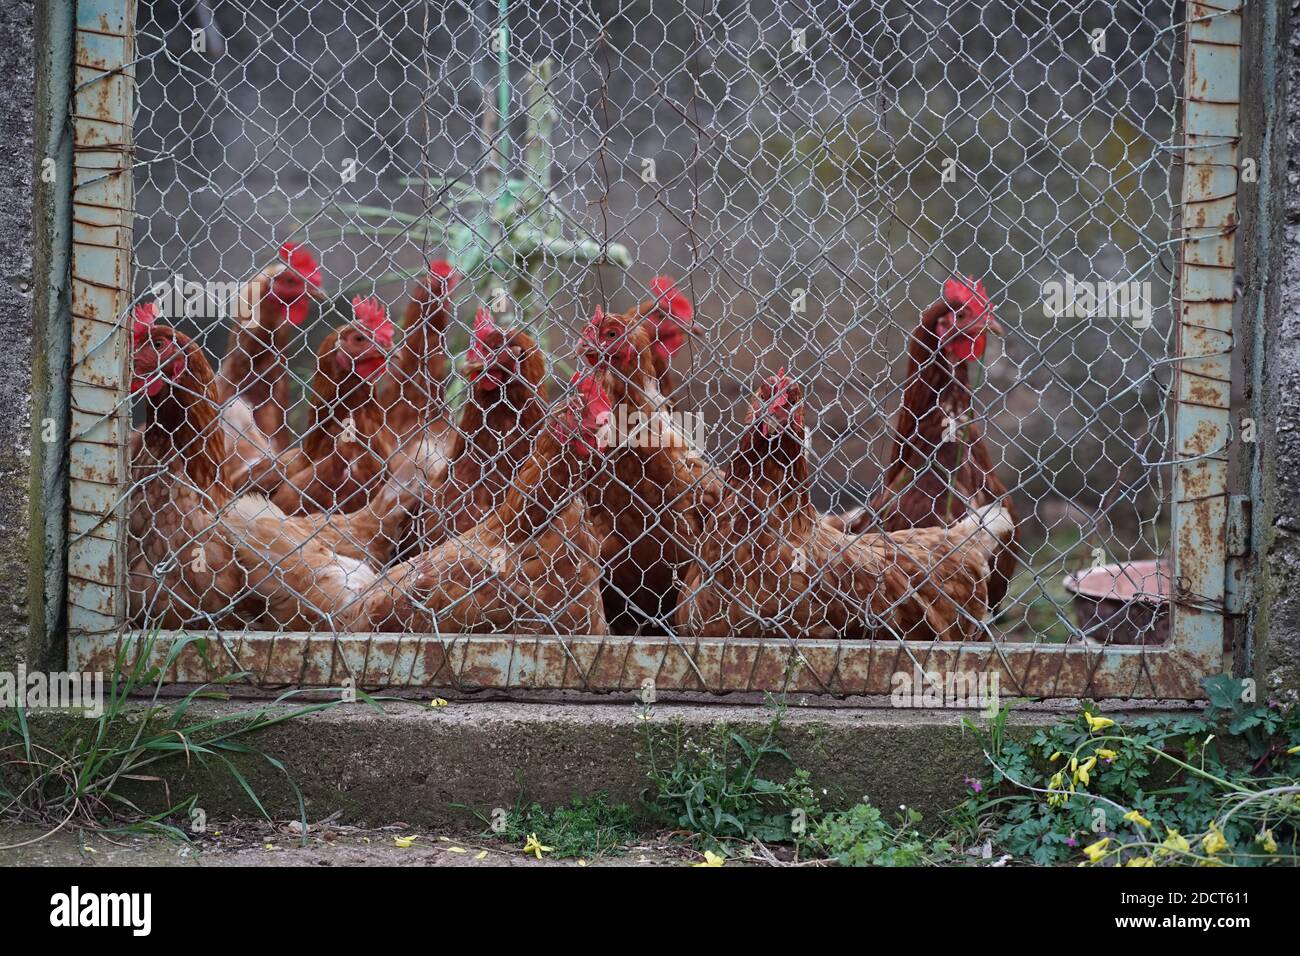 Chickens Stock Photo